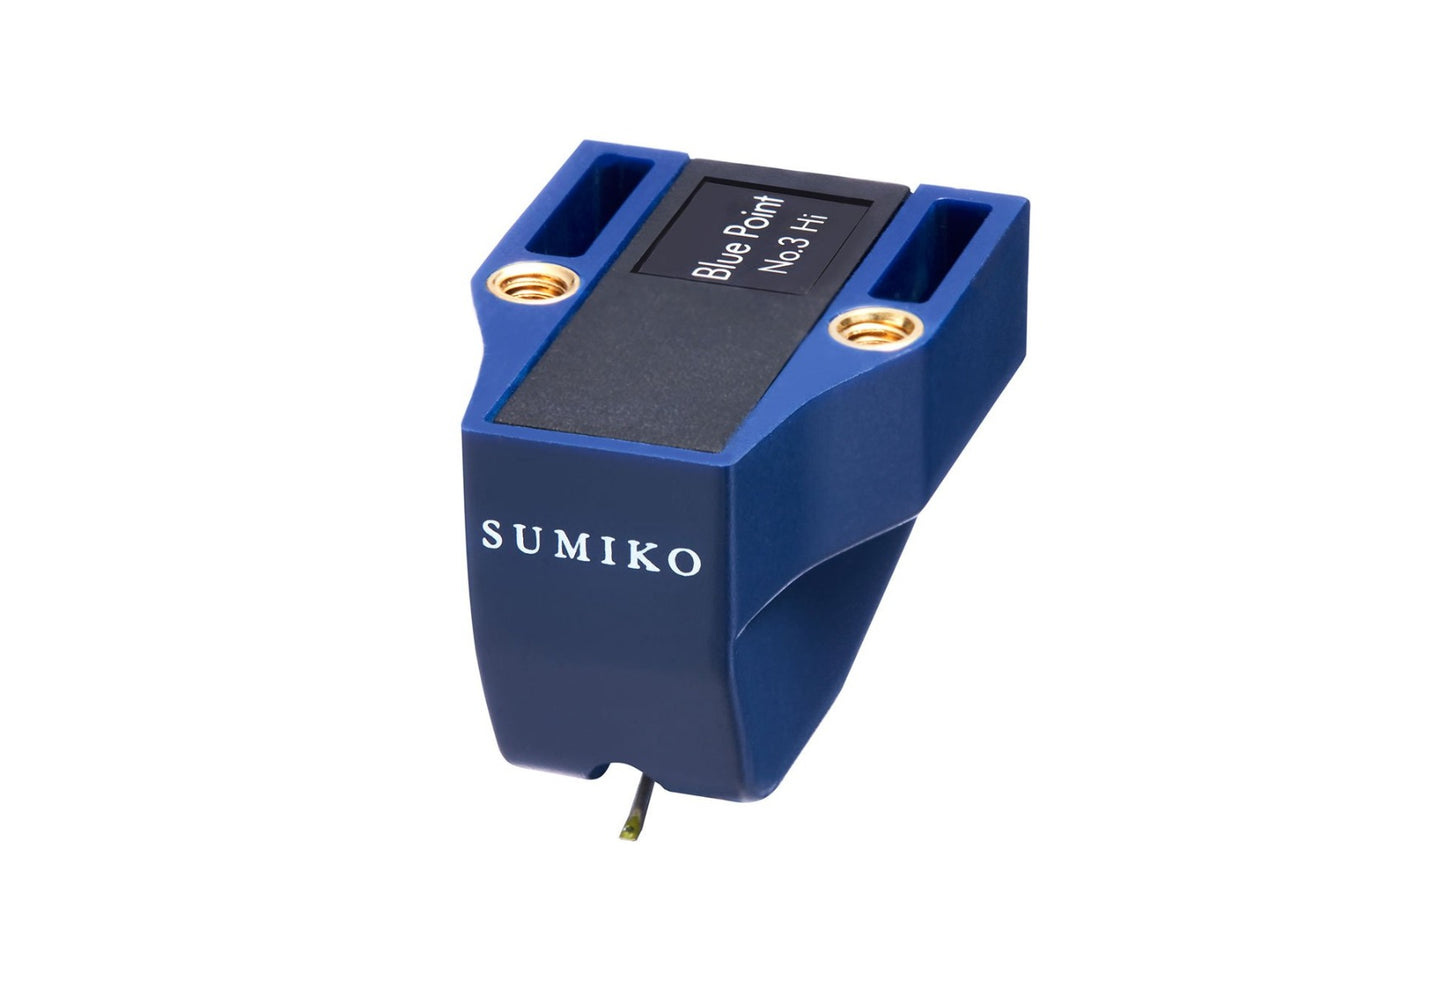 Sumiko Blue Point No. 3 High MC Phono Cartridge